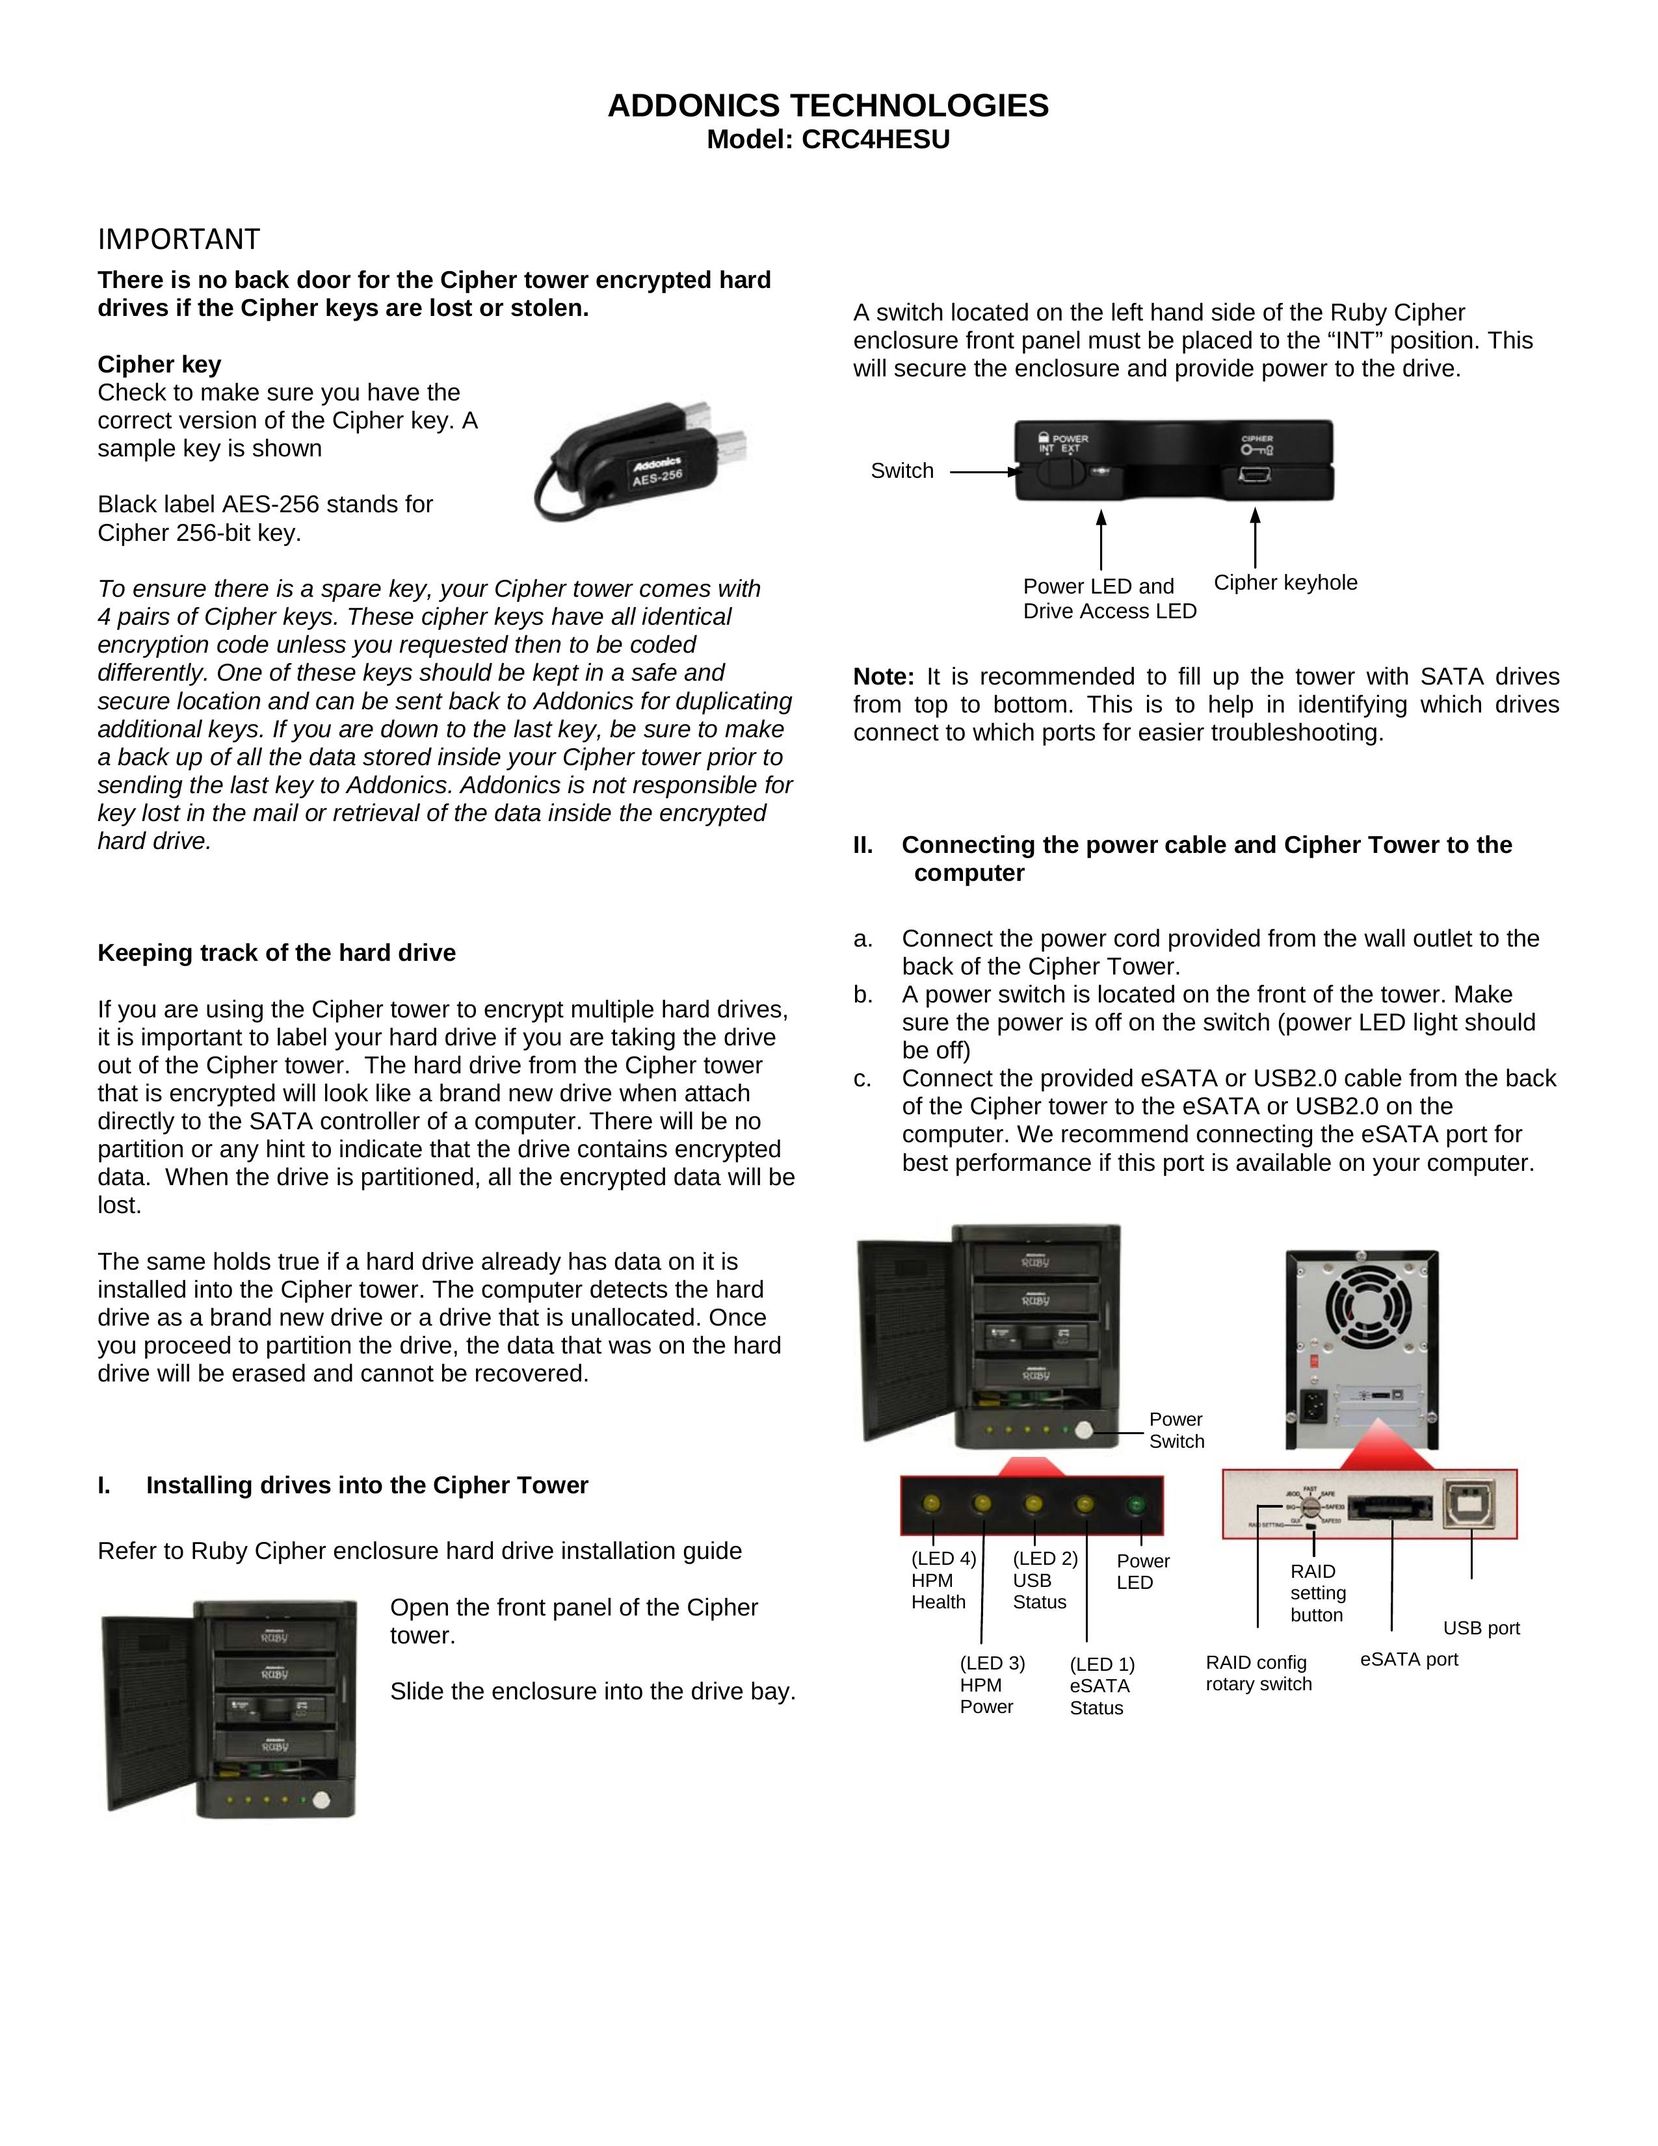 Addonics Technologies CRC4HESU Computer Accessories User Manual